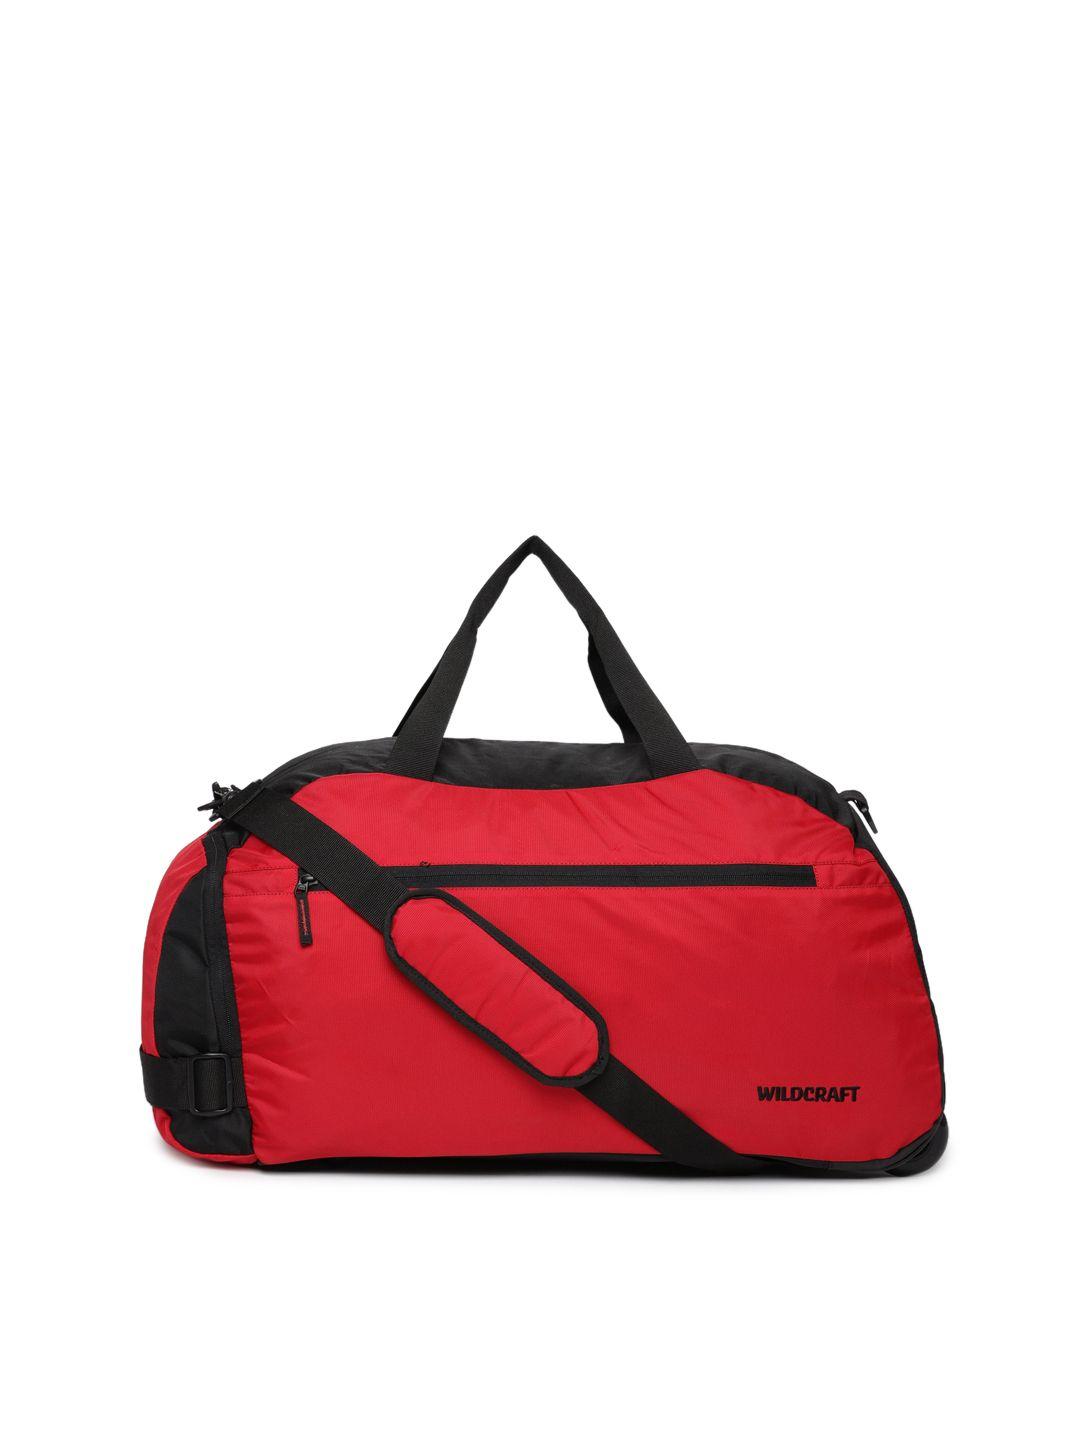 wildcraft unisex black & red colourblocked duff 5 trolley duffel bag